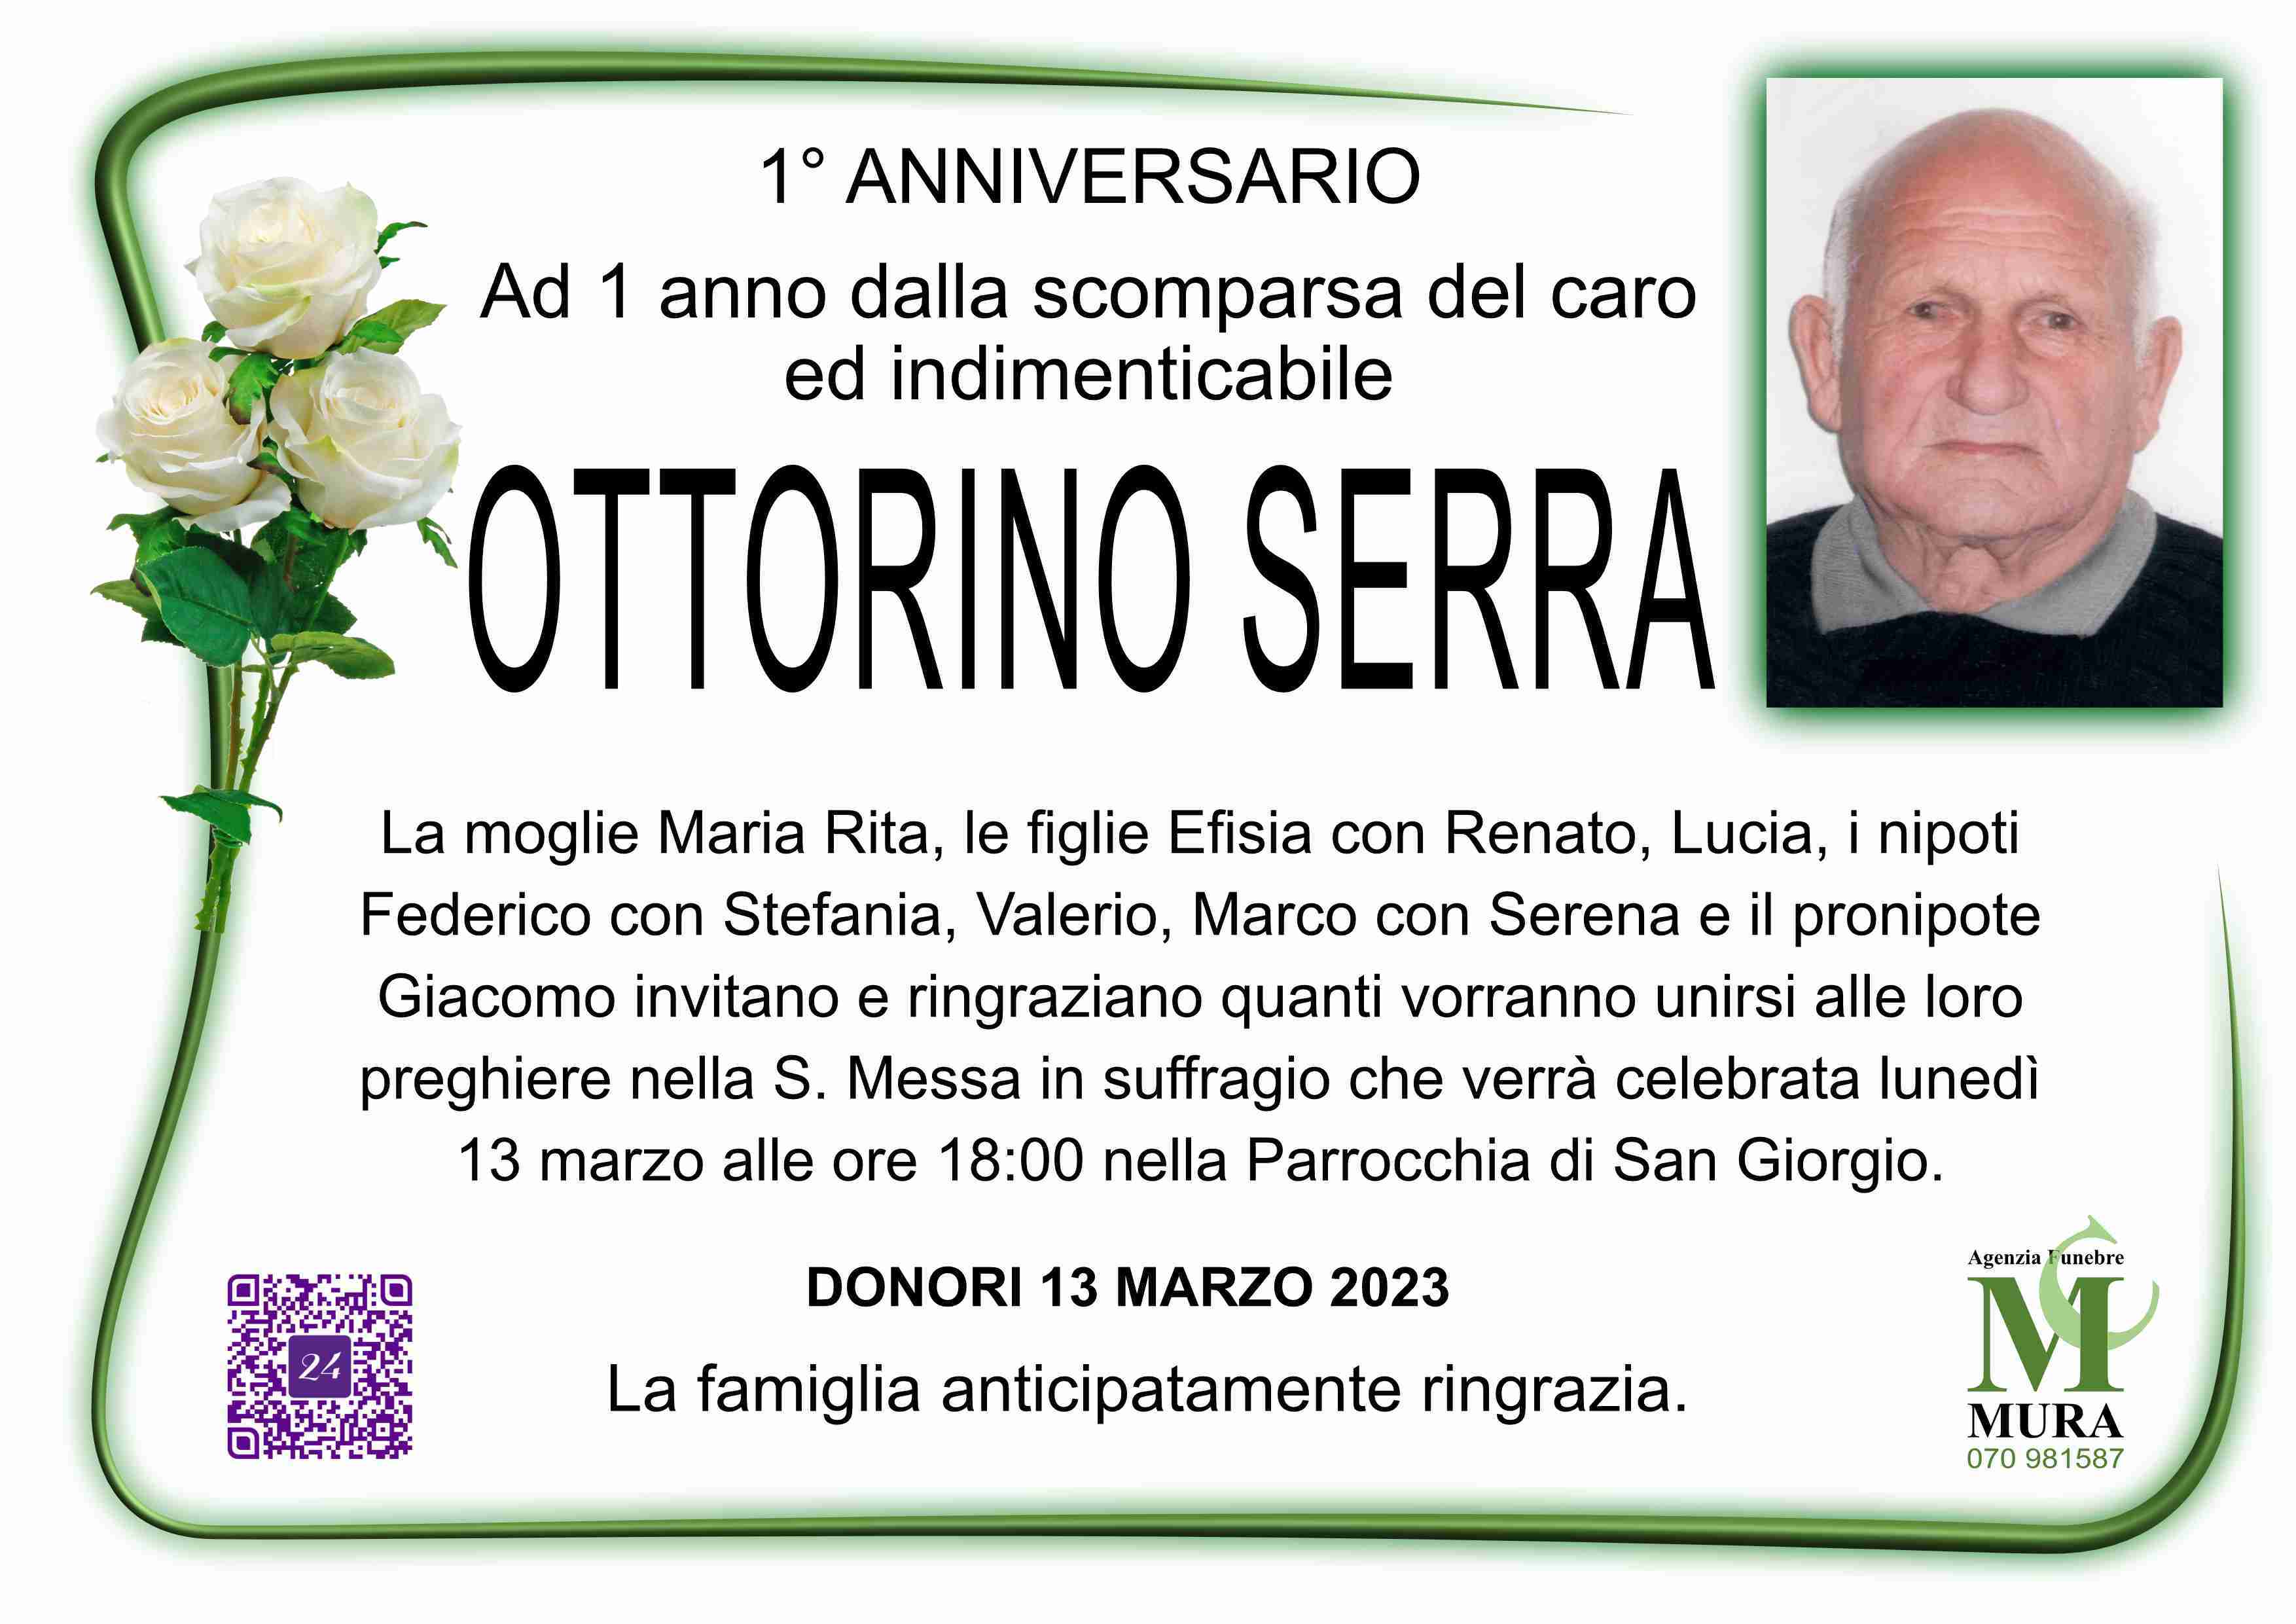 Ottorino Serra